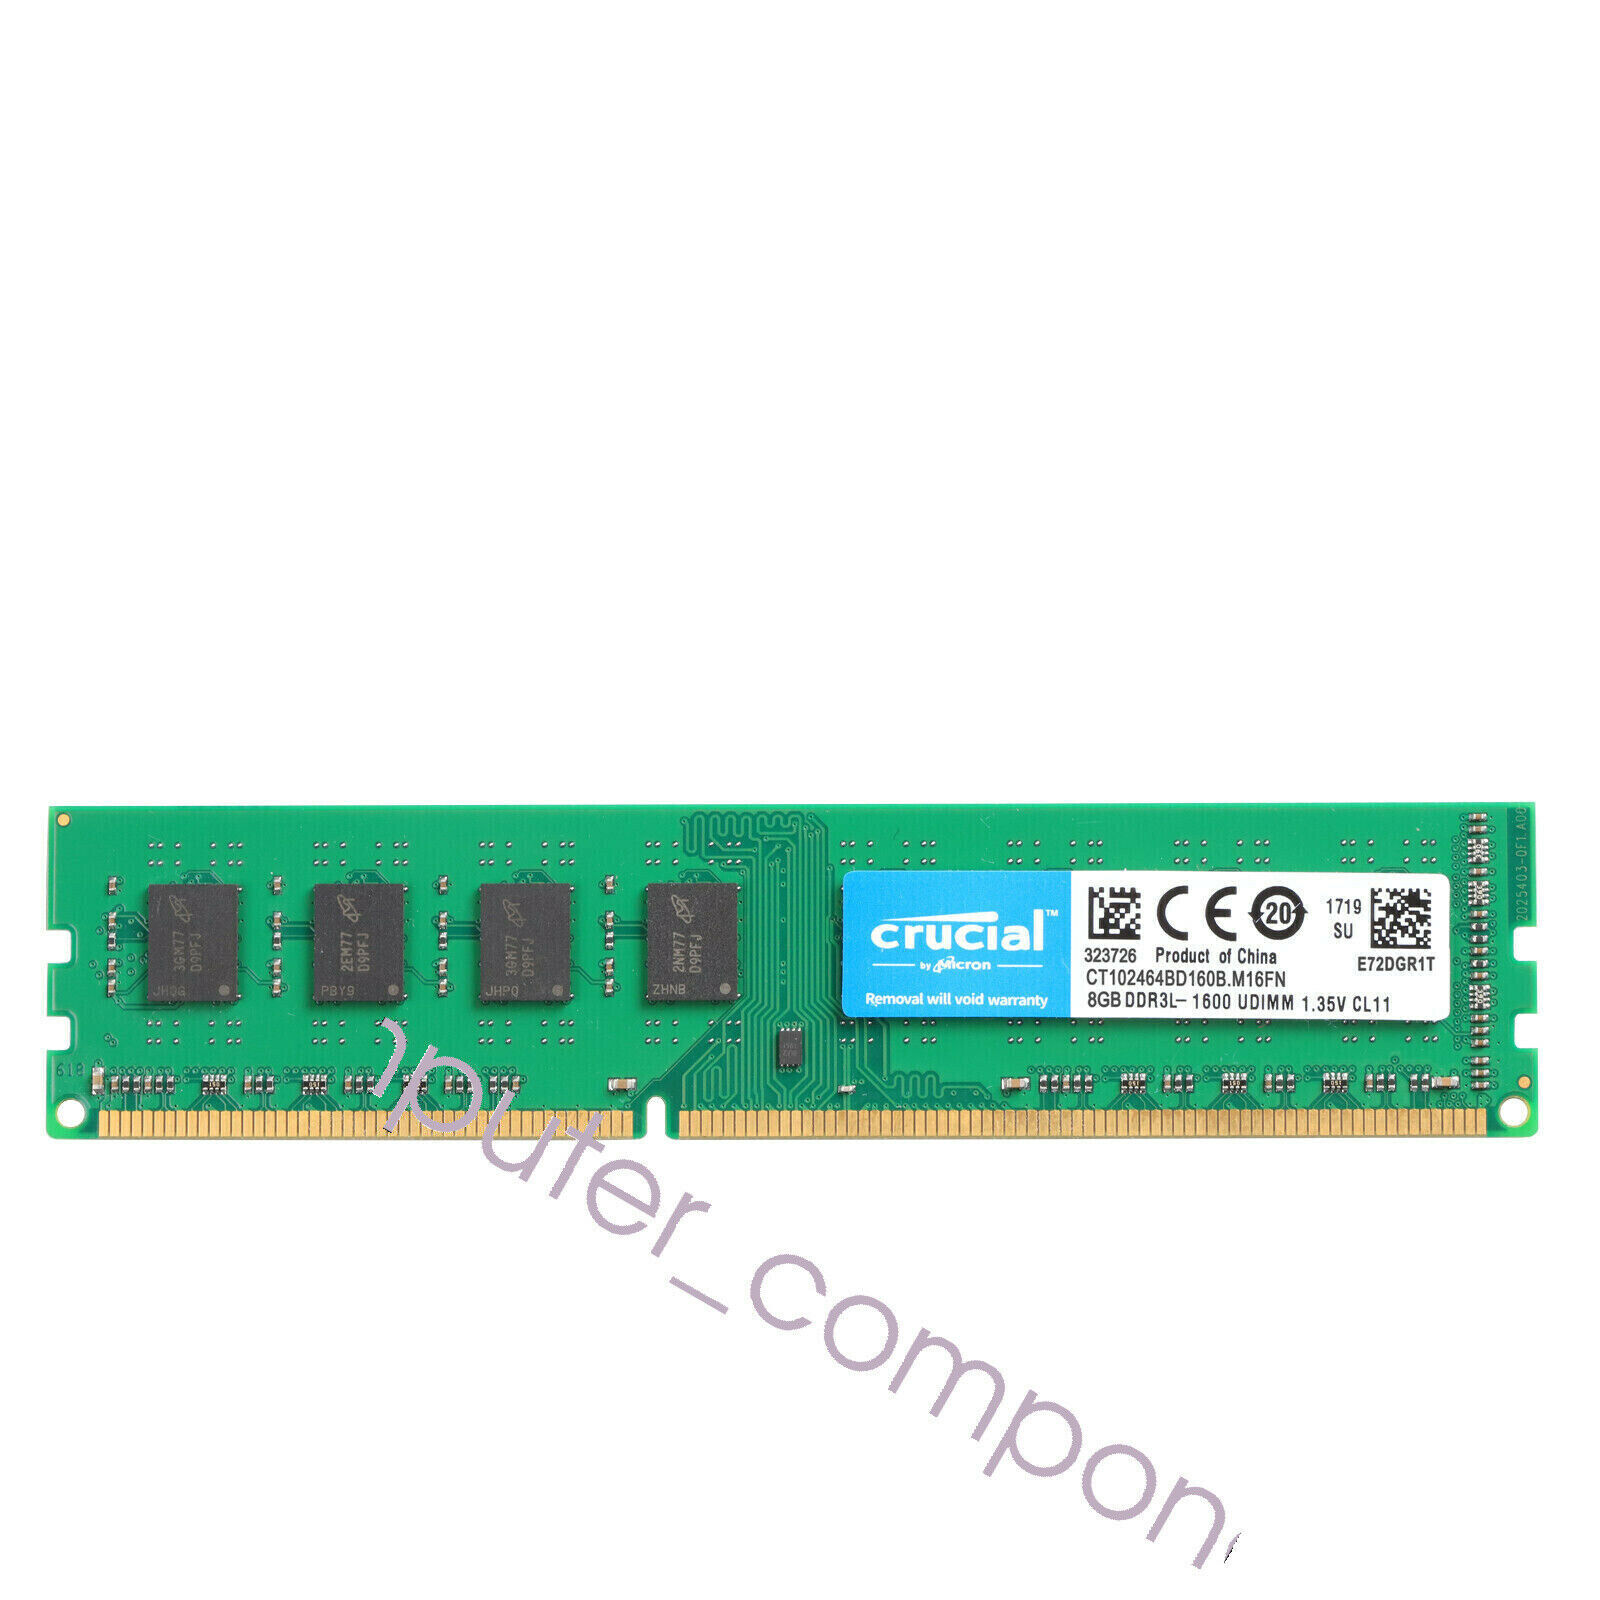 Crucial 8GB 1600MHz DDR3L UDIMM 240-Pin RAM Desktop CL11 1.35V 2Rx8 LOT Memory